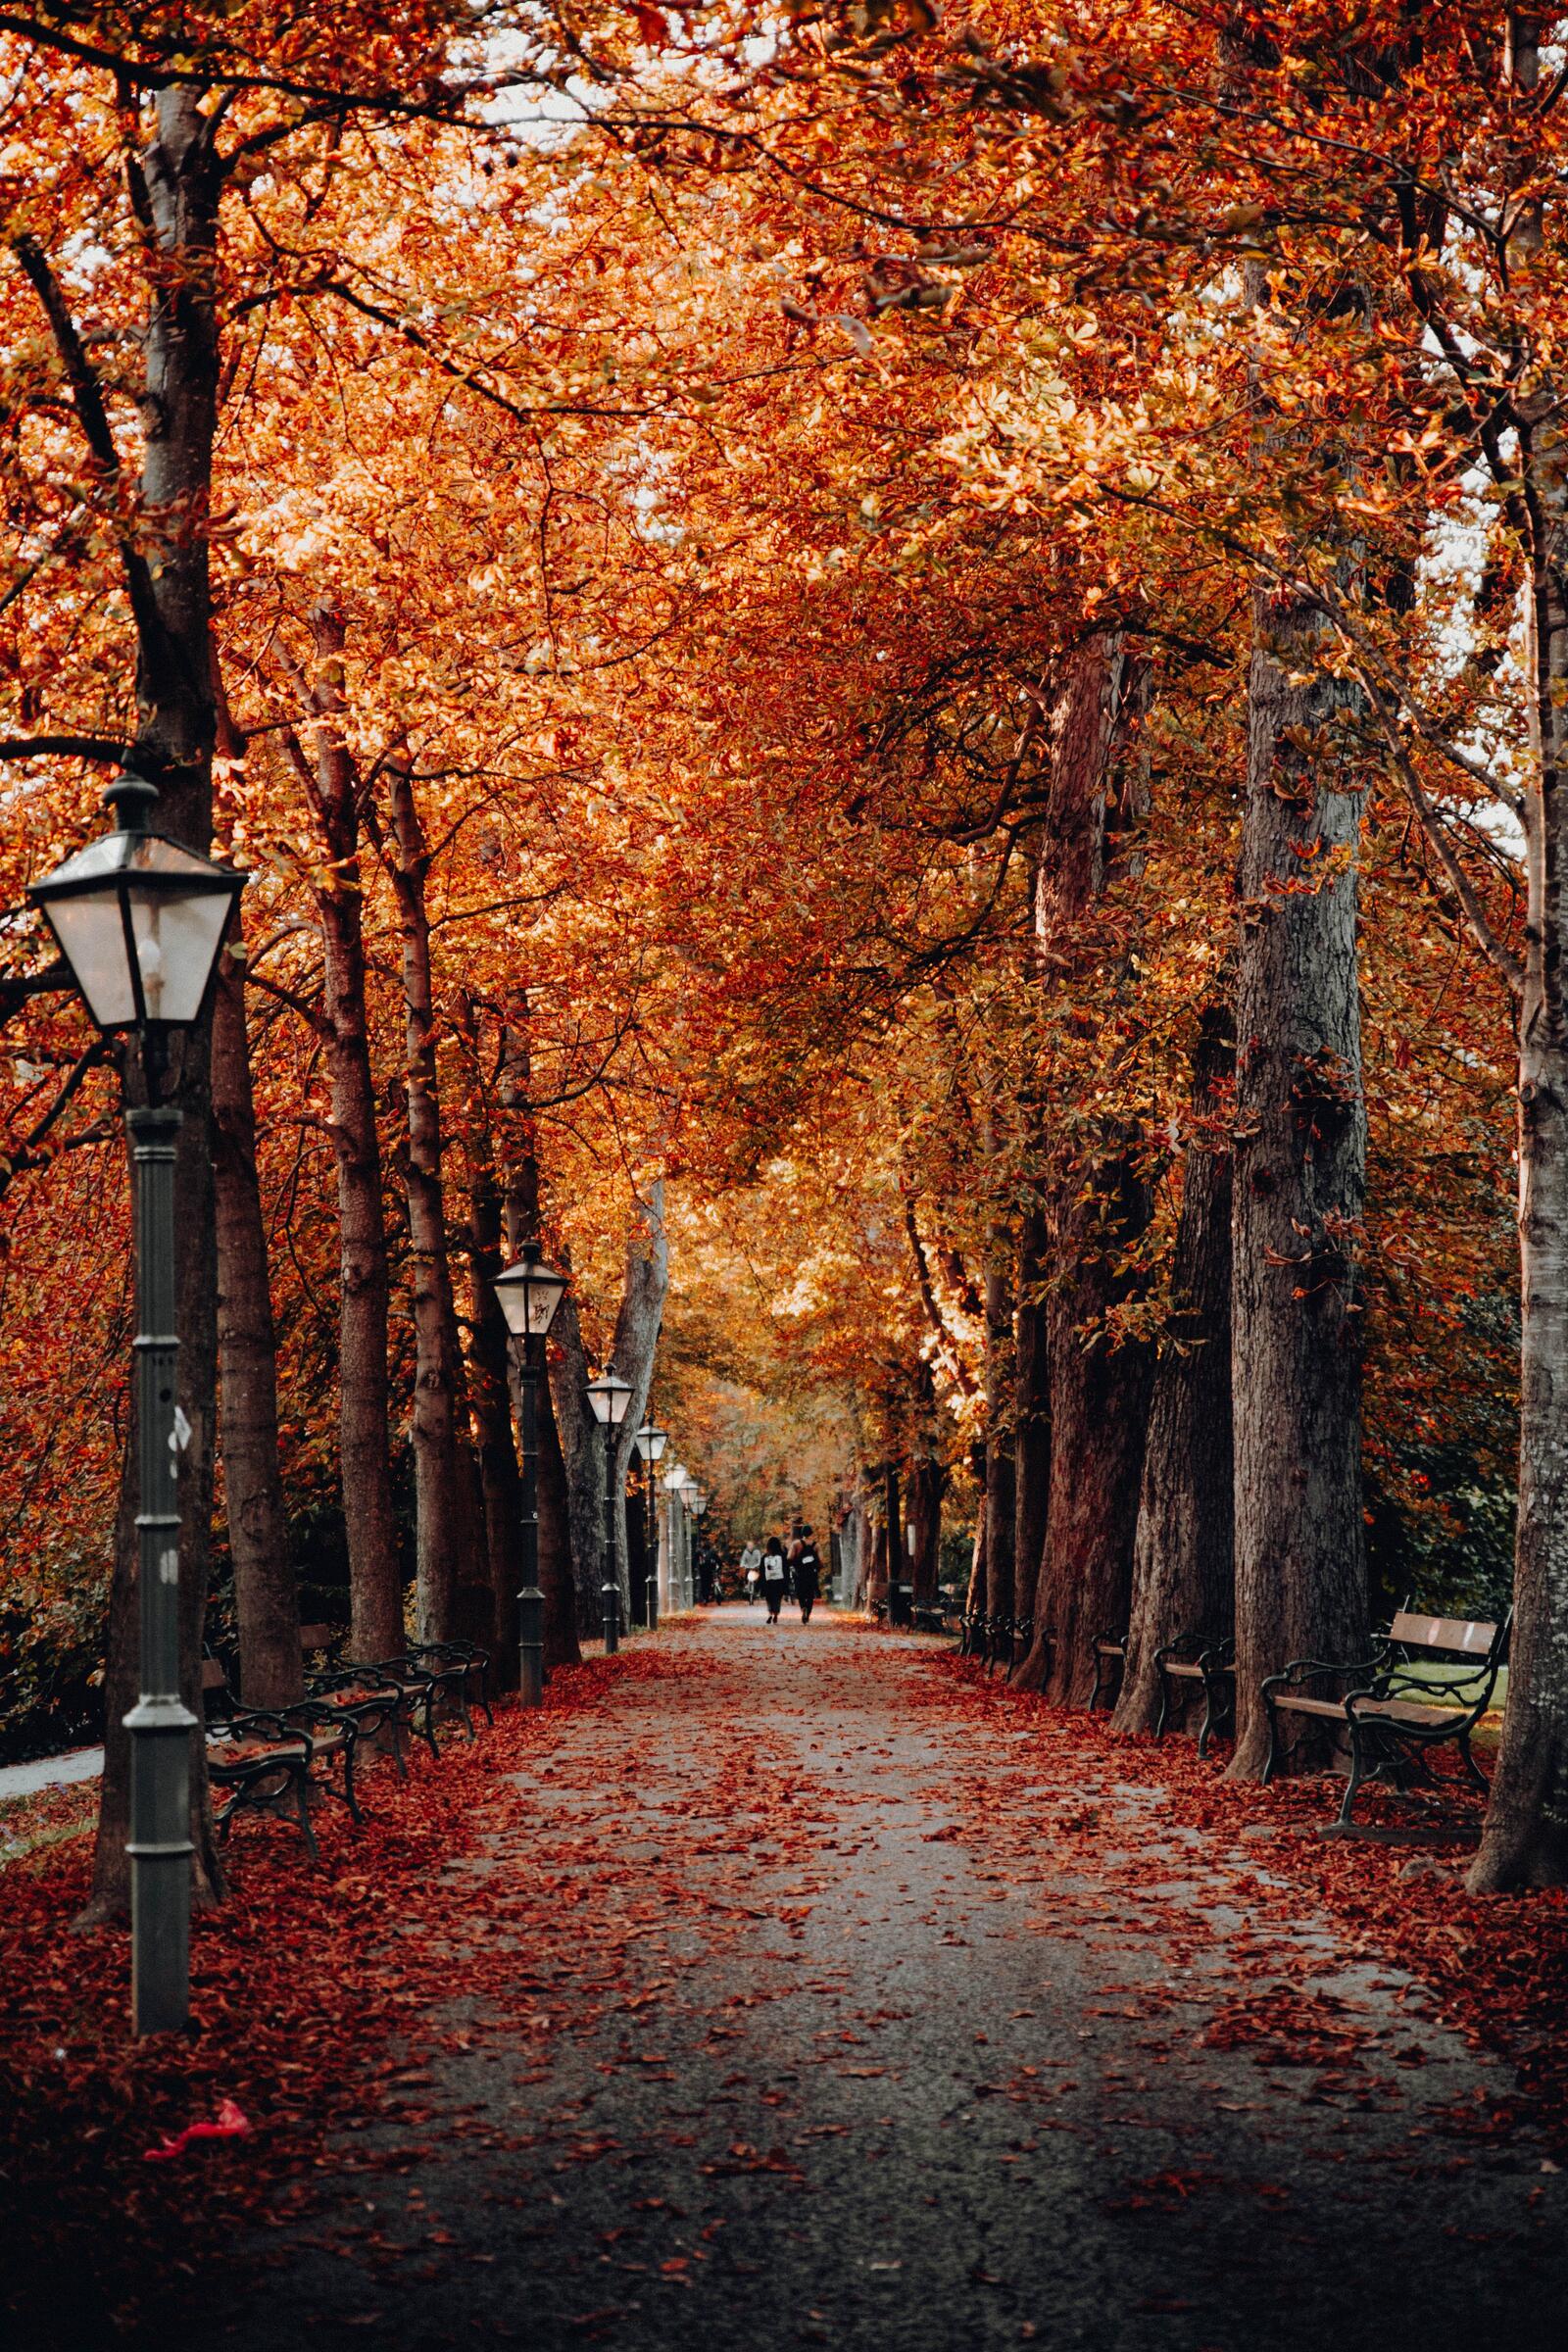 Free photo Autumn alley with fallen orange leaves